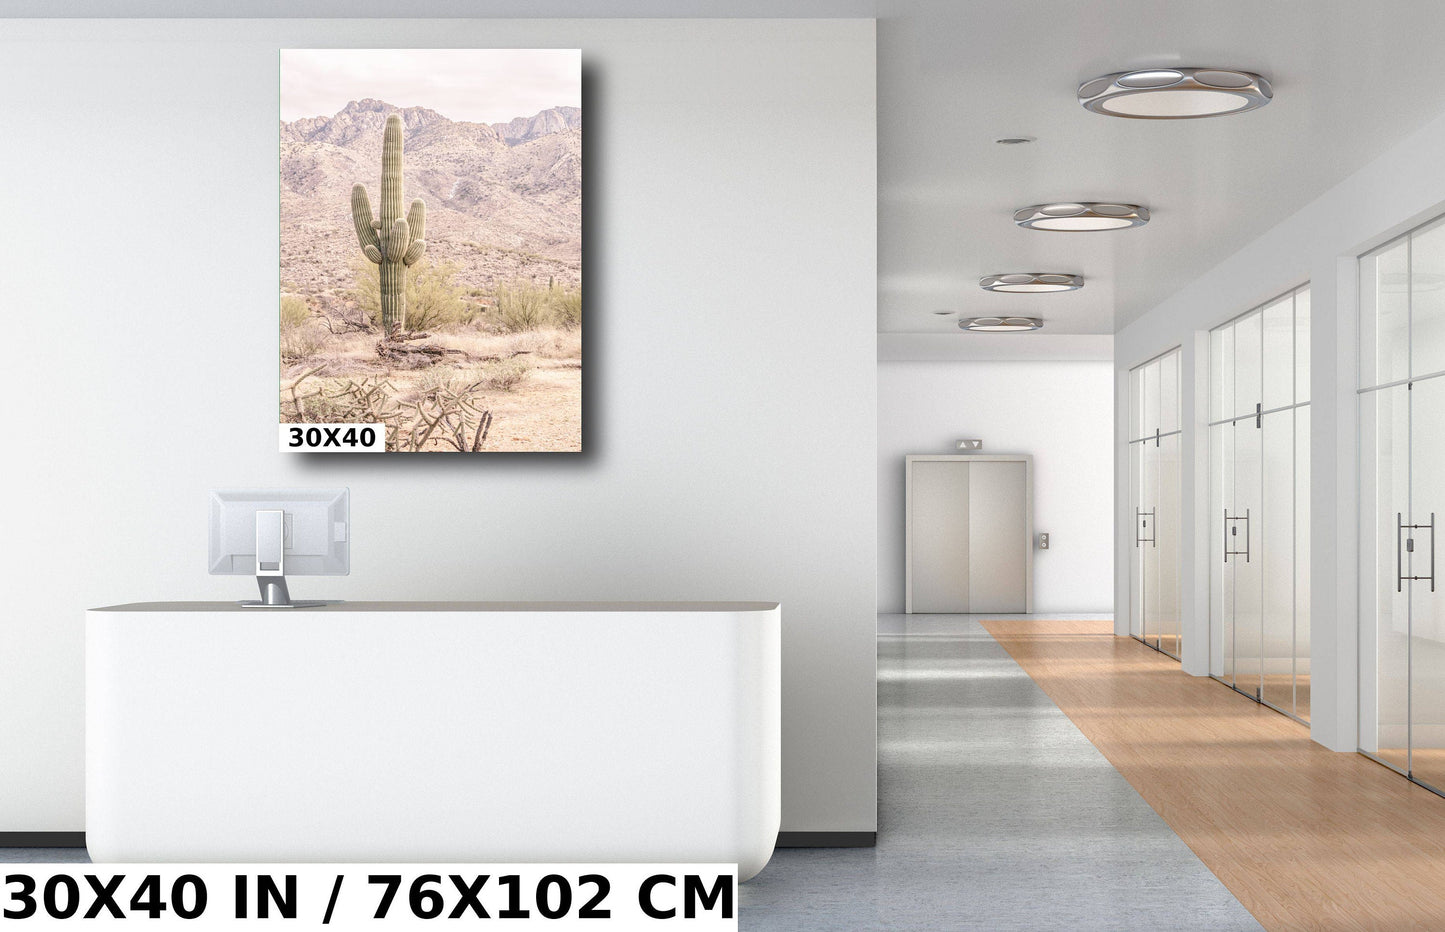 Sculpted Echoes of Nature: Saguaro Cactus Arizona Wall Art Photography Southwestern Cactus Metal Aluminum Print